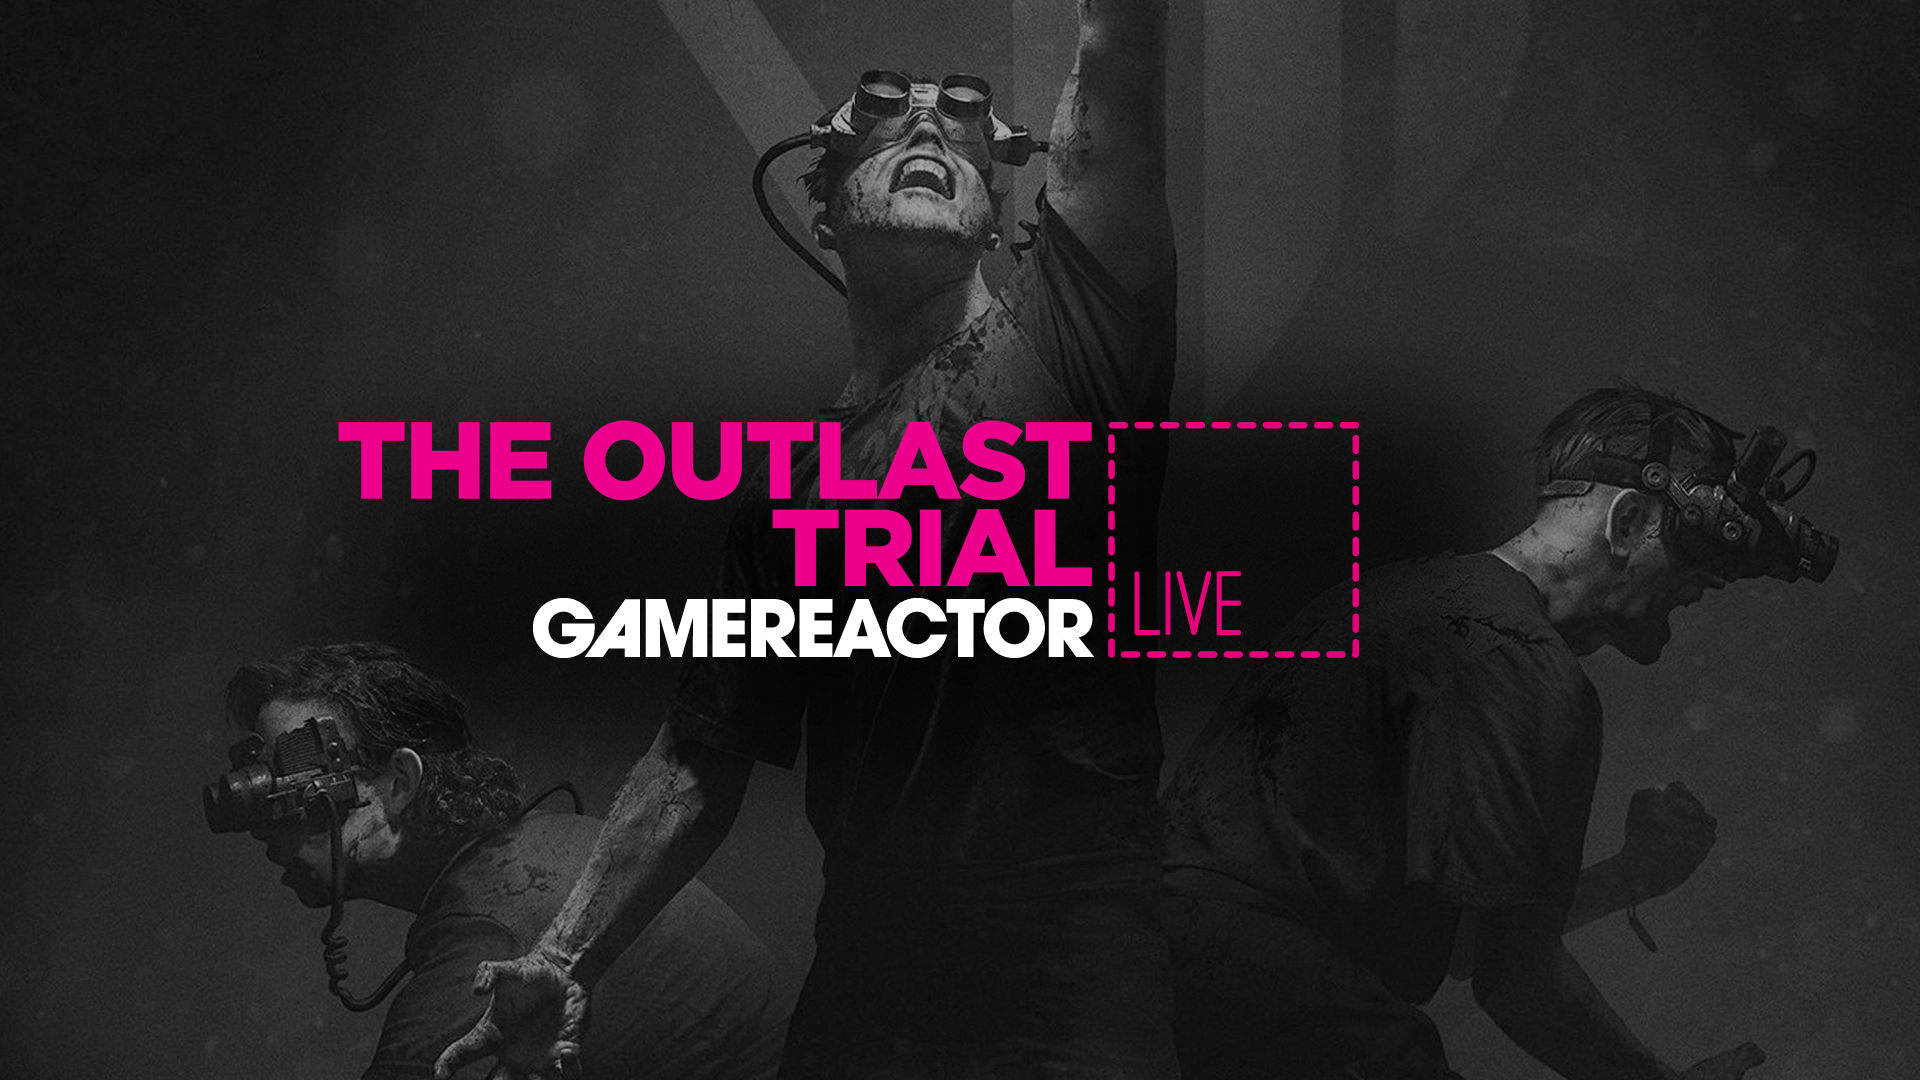 The Outlast Trials gets a teaser trailer